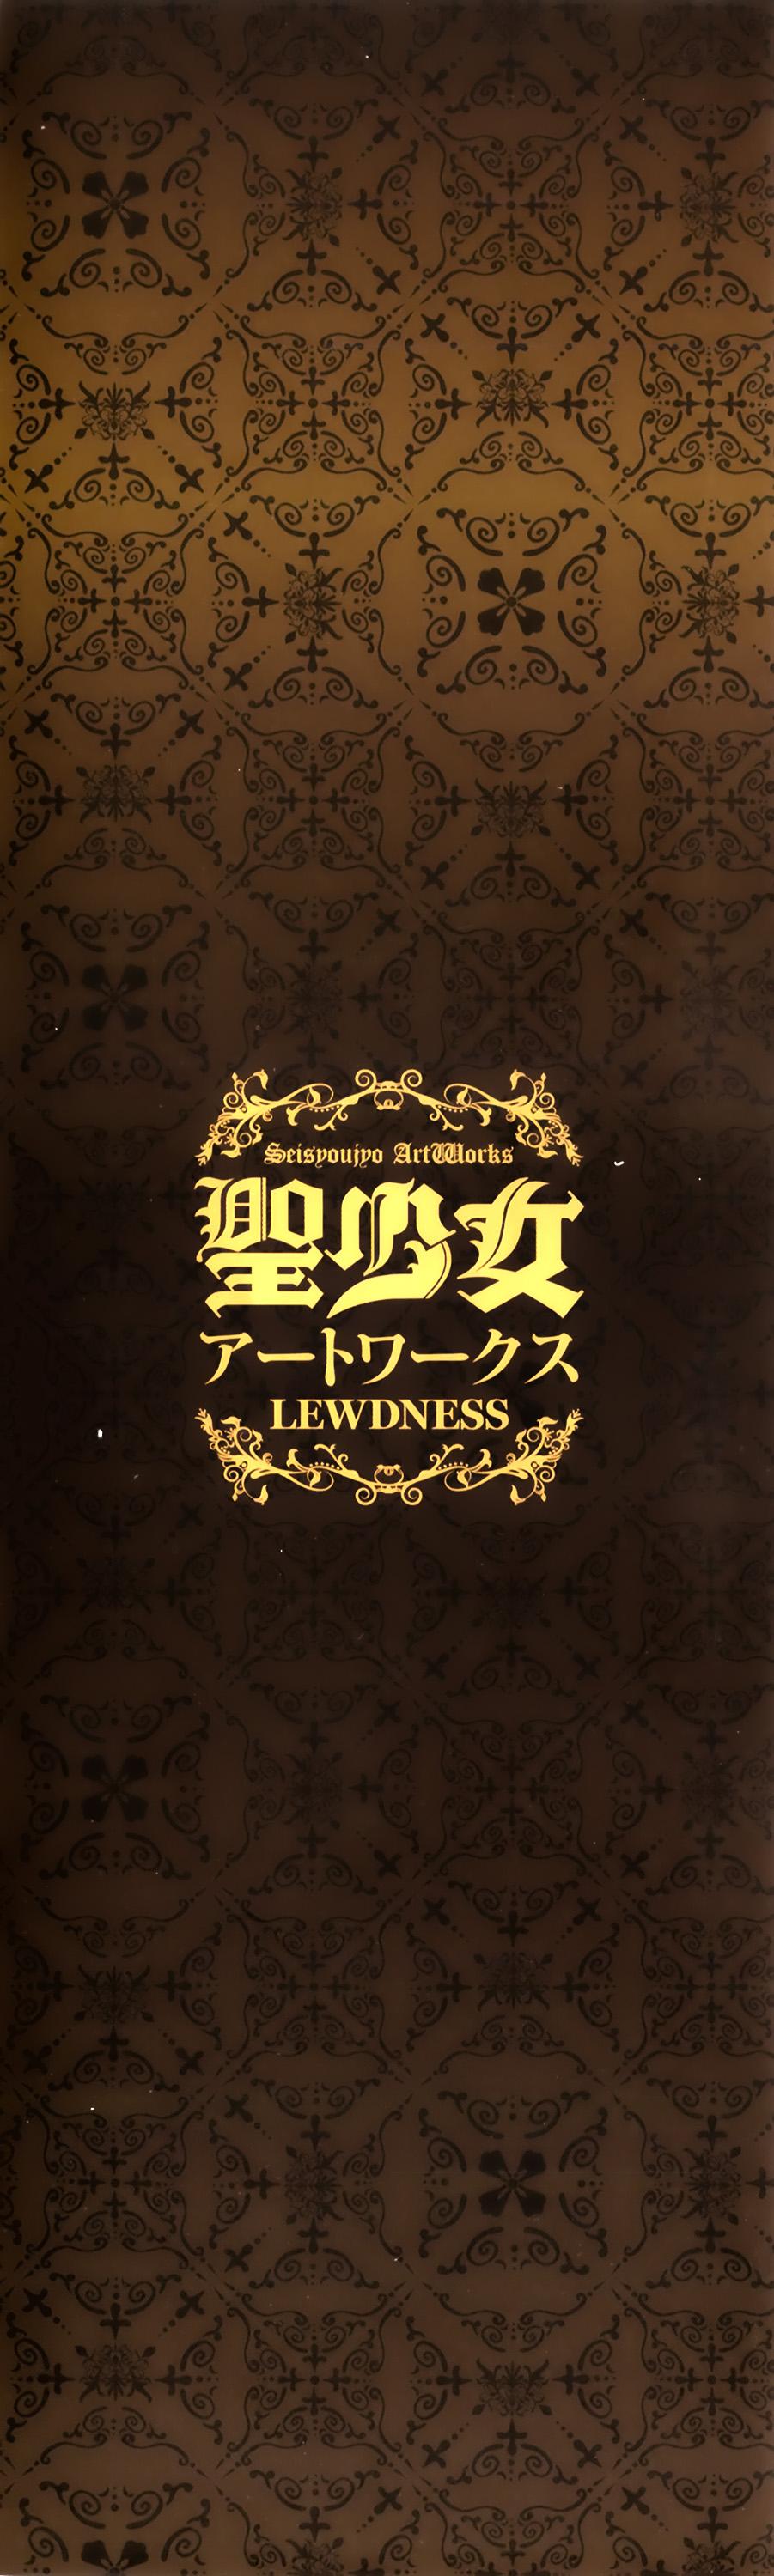 LEWDNESS 4